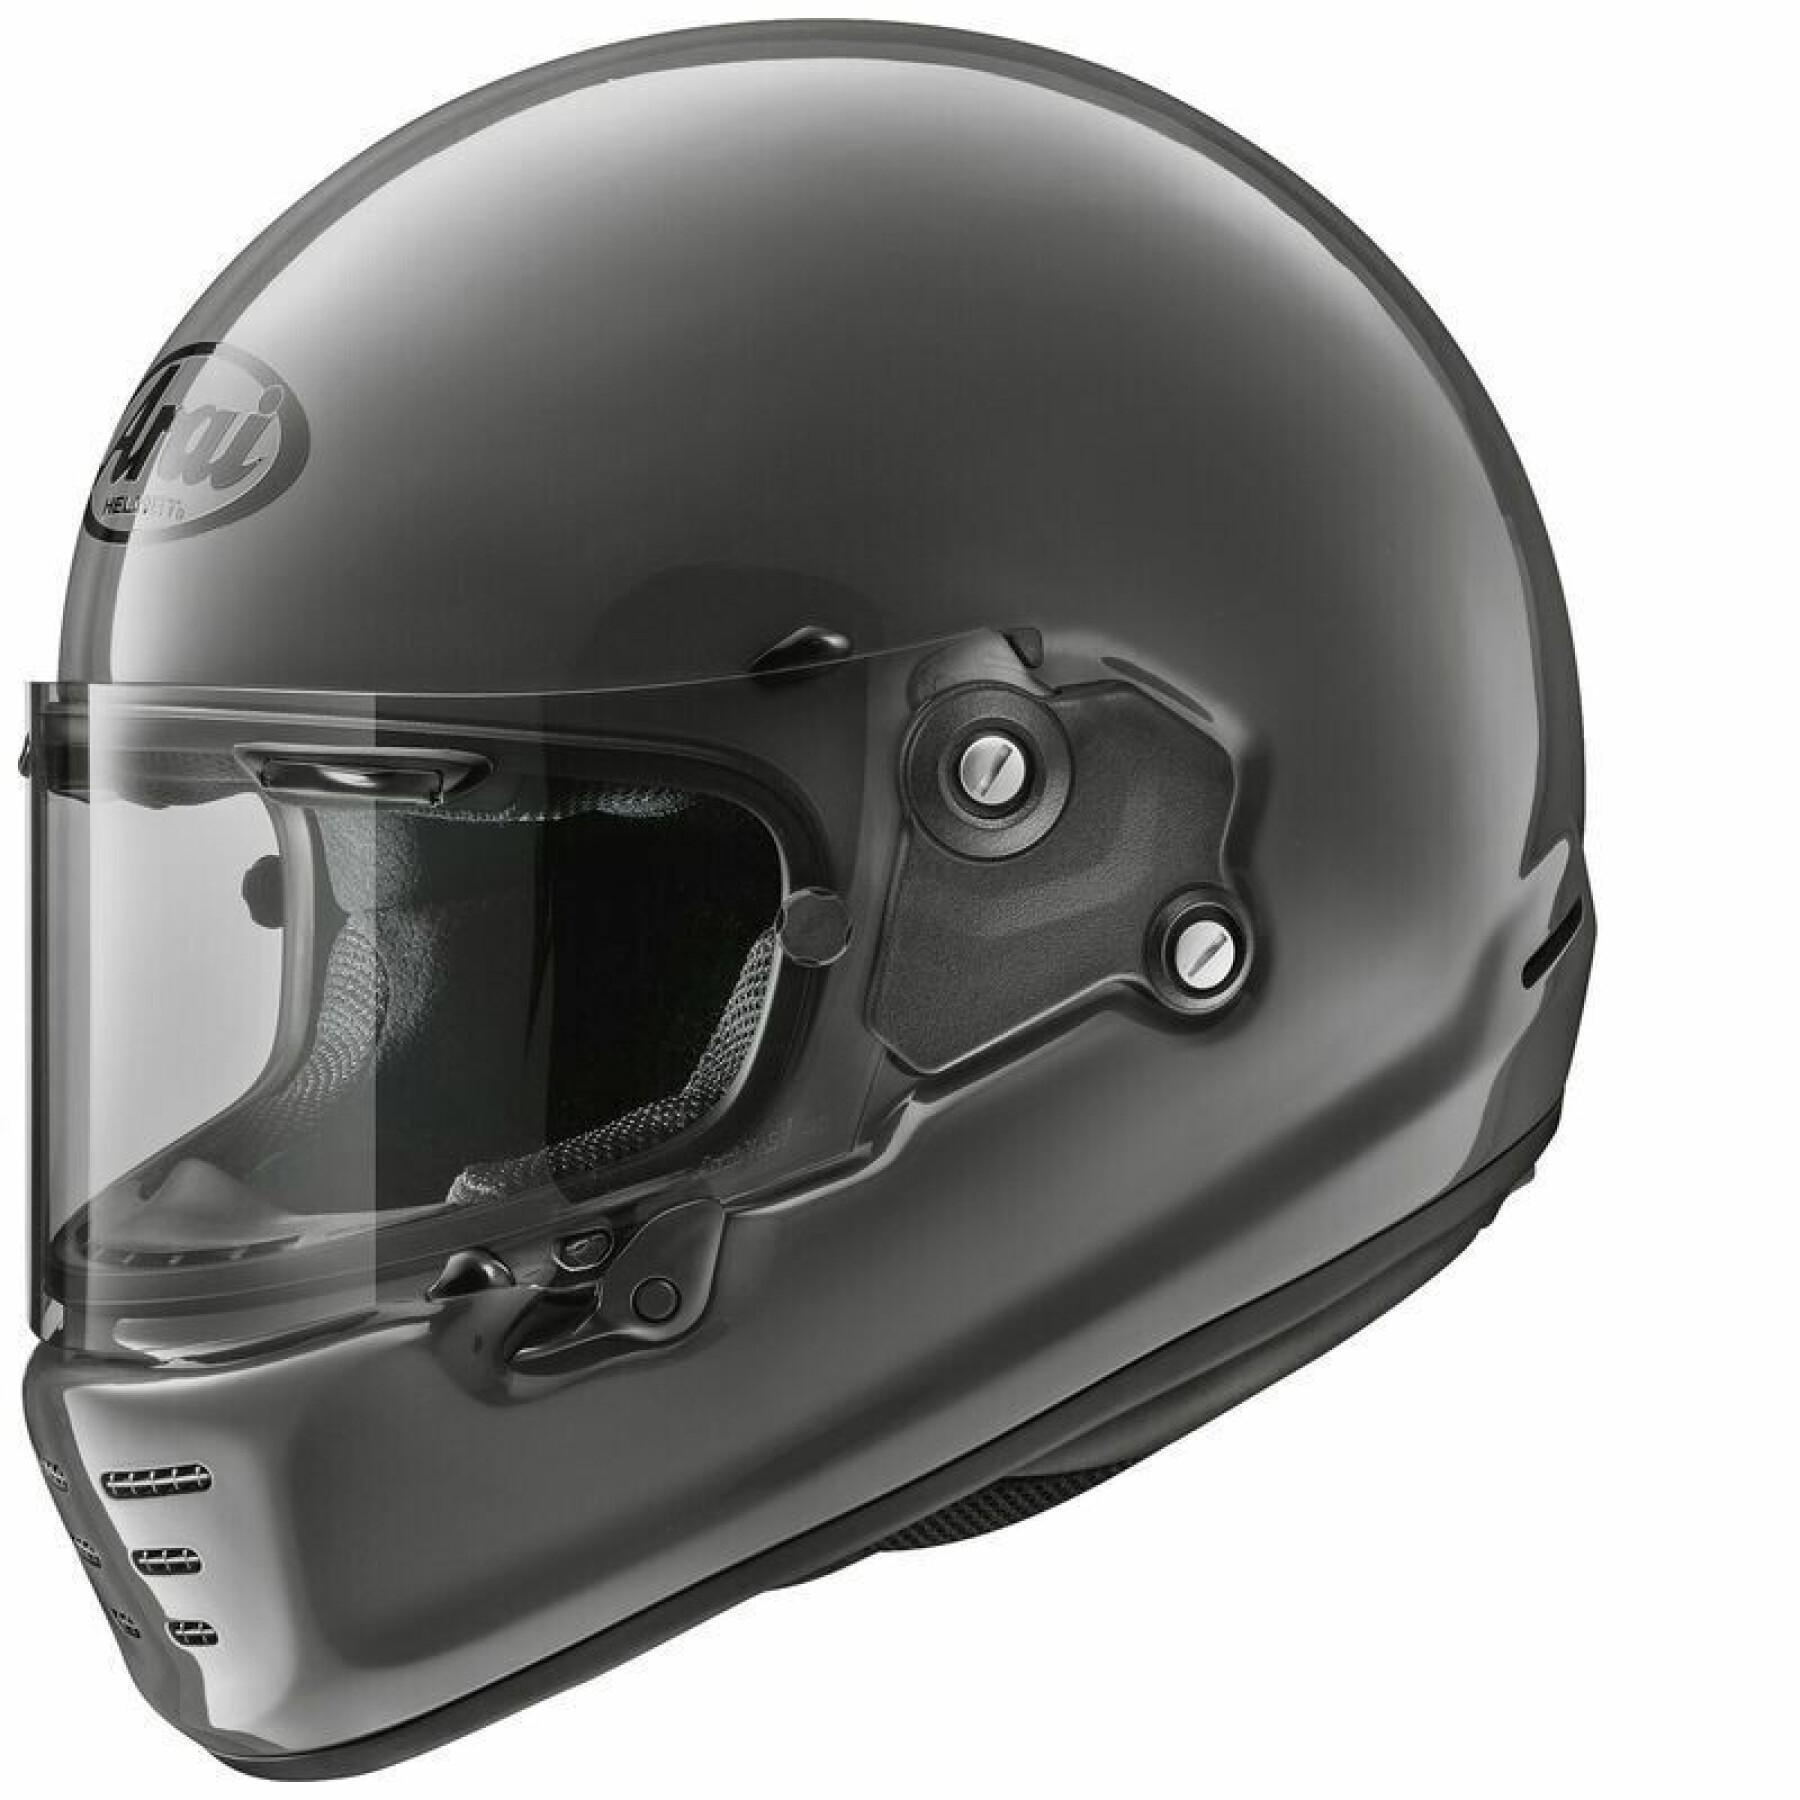 Full face motorcycle helmet Arai Concept-XE